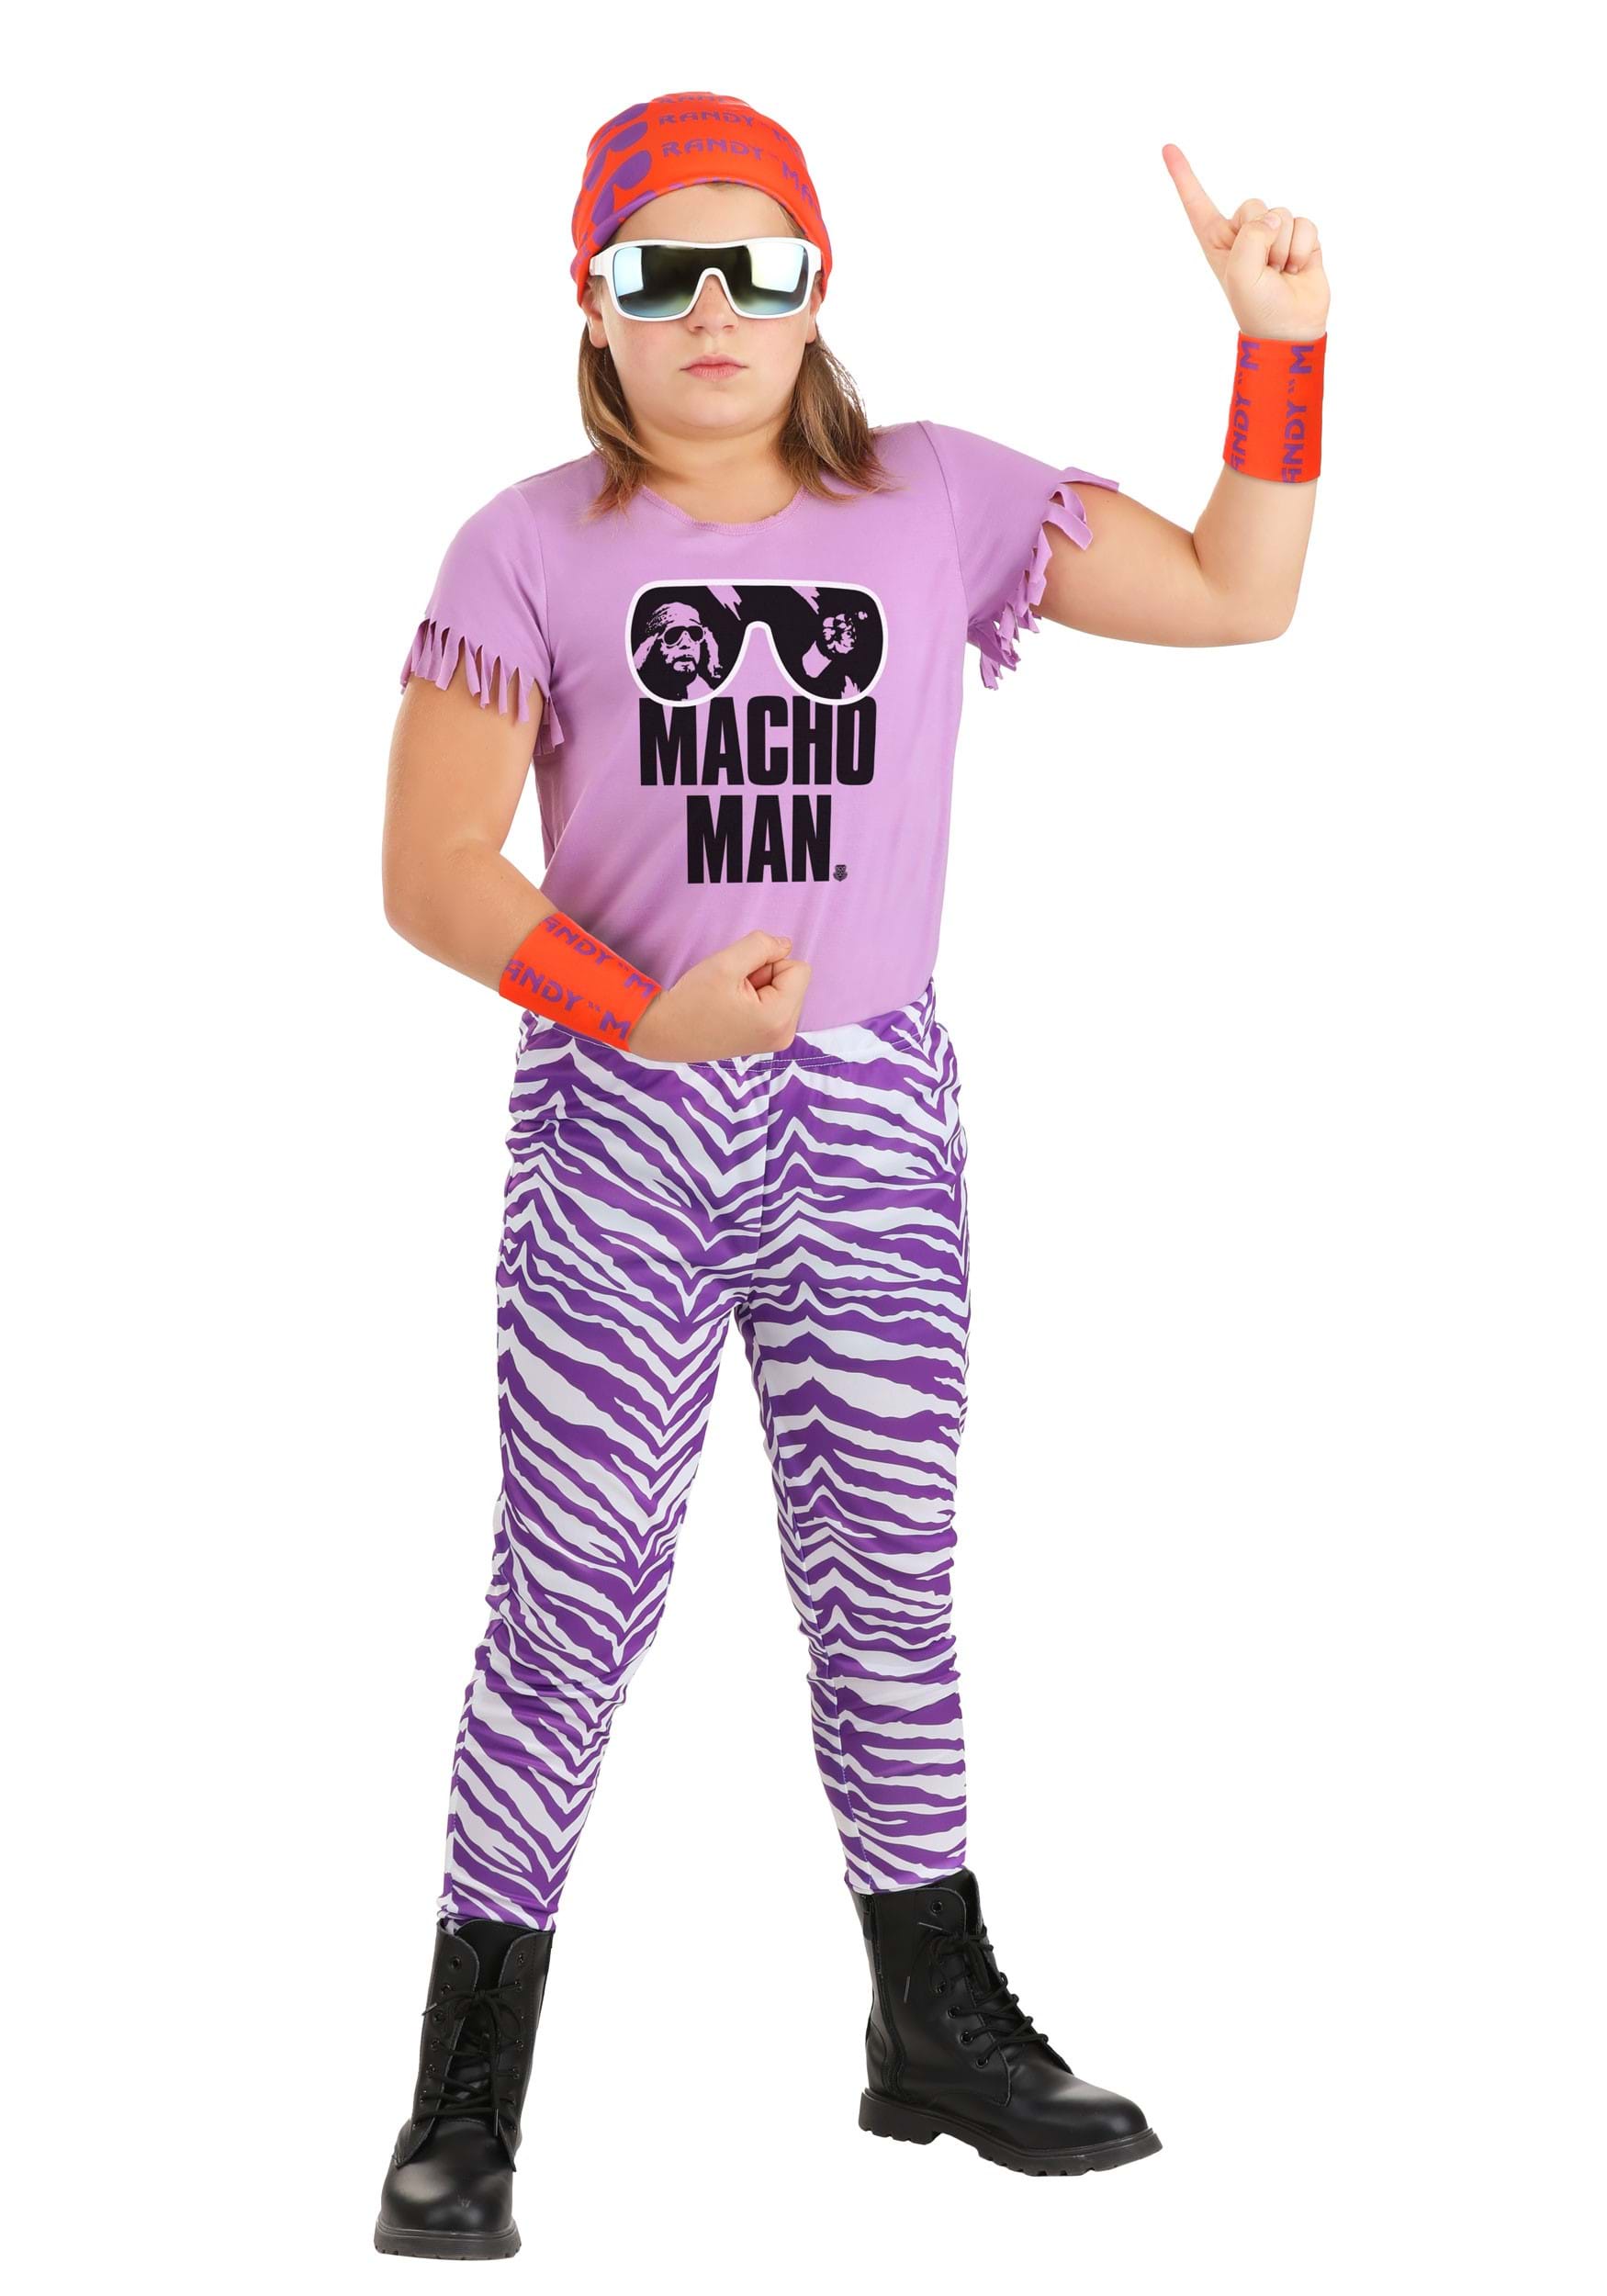 WWE Macho Man Madness Costume For Kids